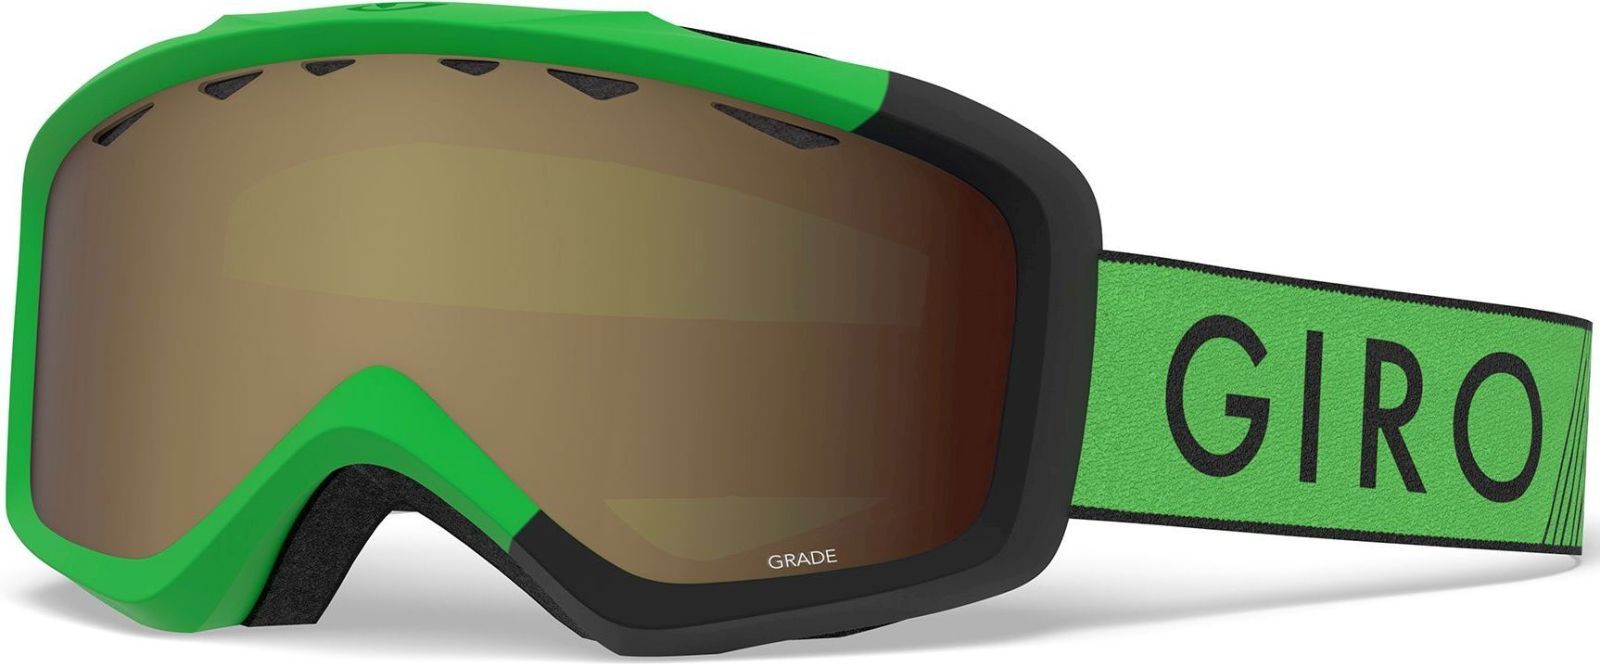 Giro Grade - Bright Green/Black Zoom AR40 uni - obrázek 1